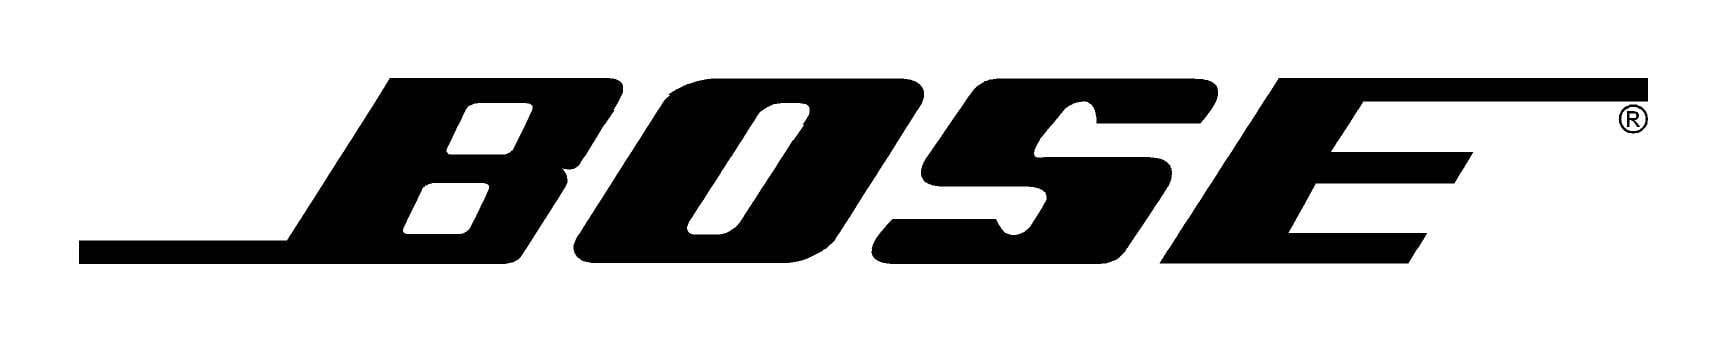 Bose Logo - bose logo - Realm Projects